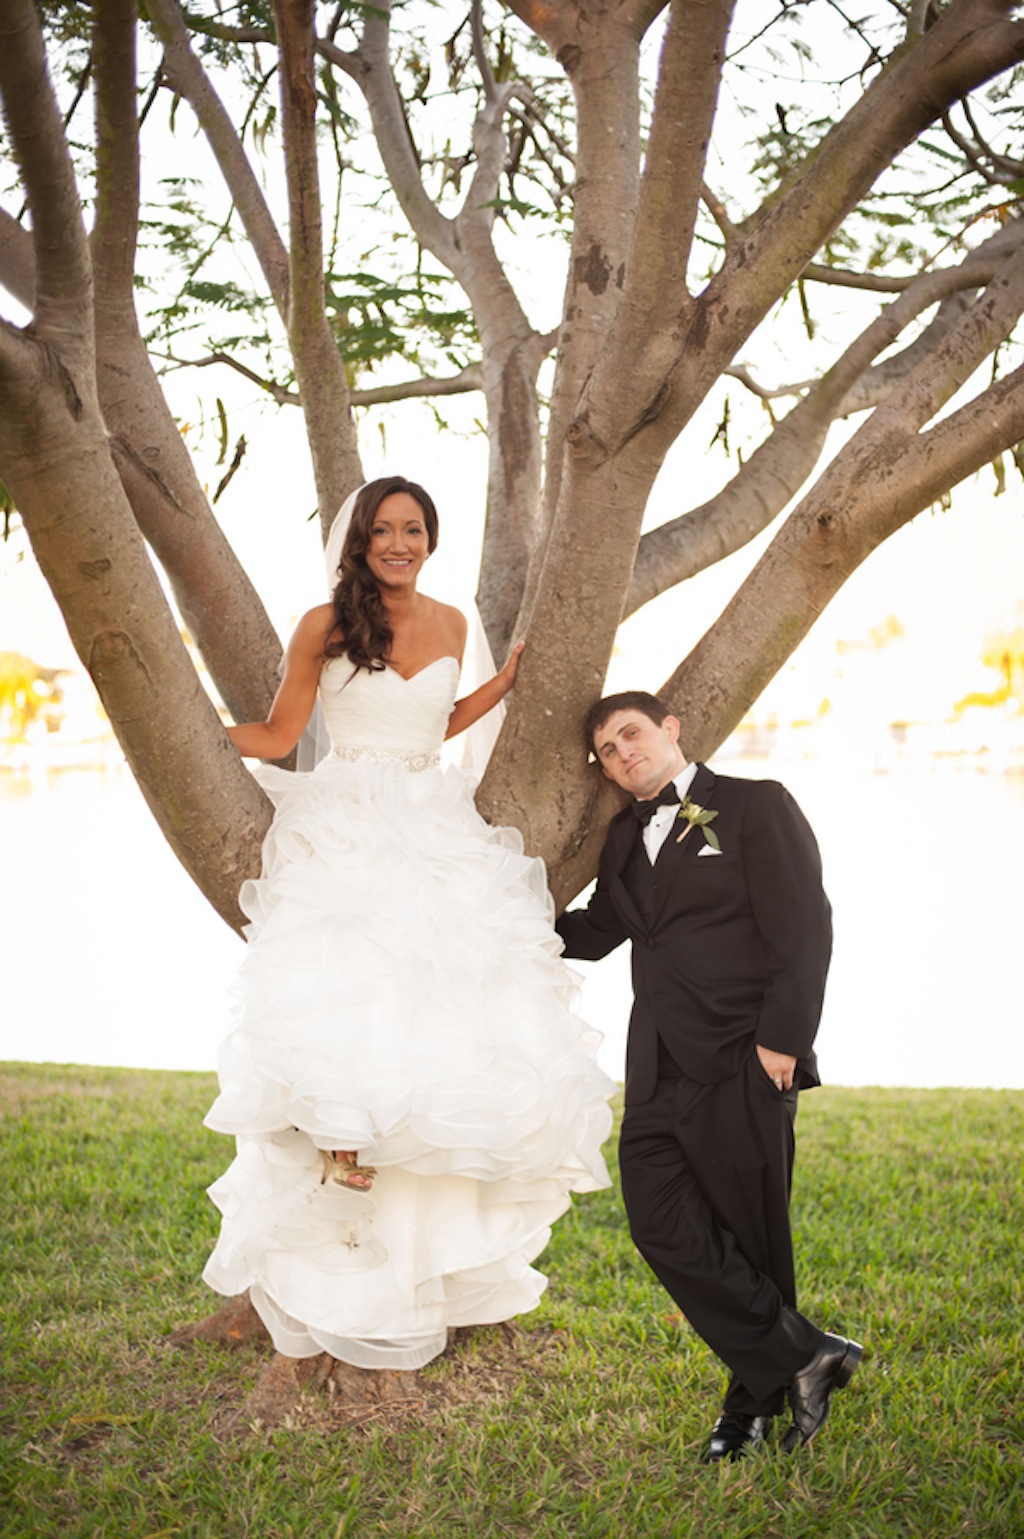 Purple, Ivory and Champagne Vintage Glam Wedding - Davis Islands Garden Club - Tampa Wedding Photographer Stephanie A. Smith Photography (18)